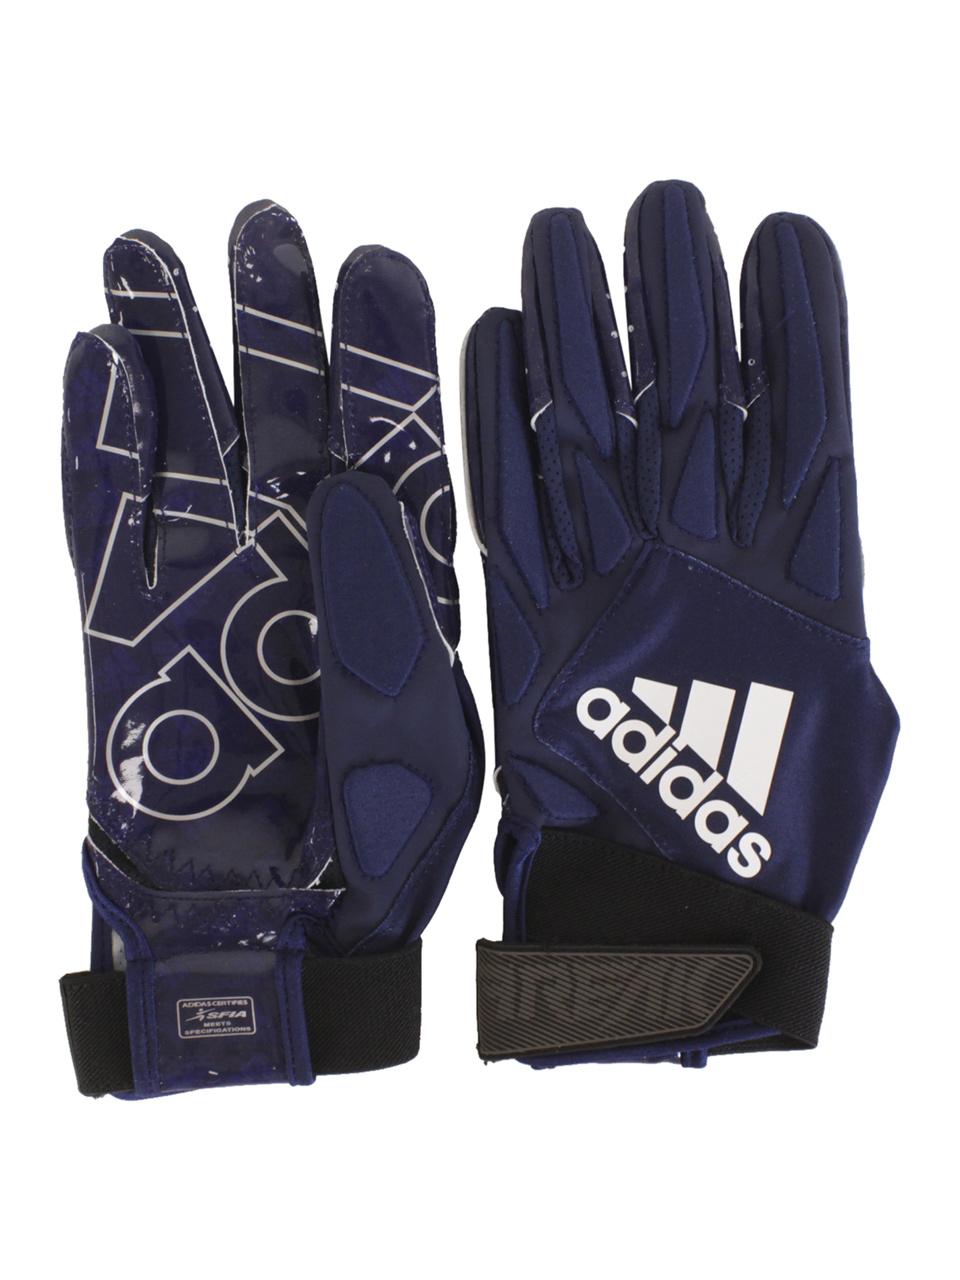 rebanada otoño Mes Adidas Men's Freak-4.0 Football Lineman Gloves | JoyLot.com